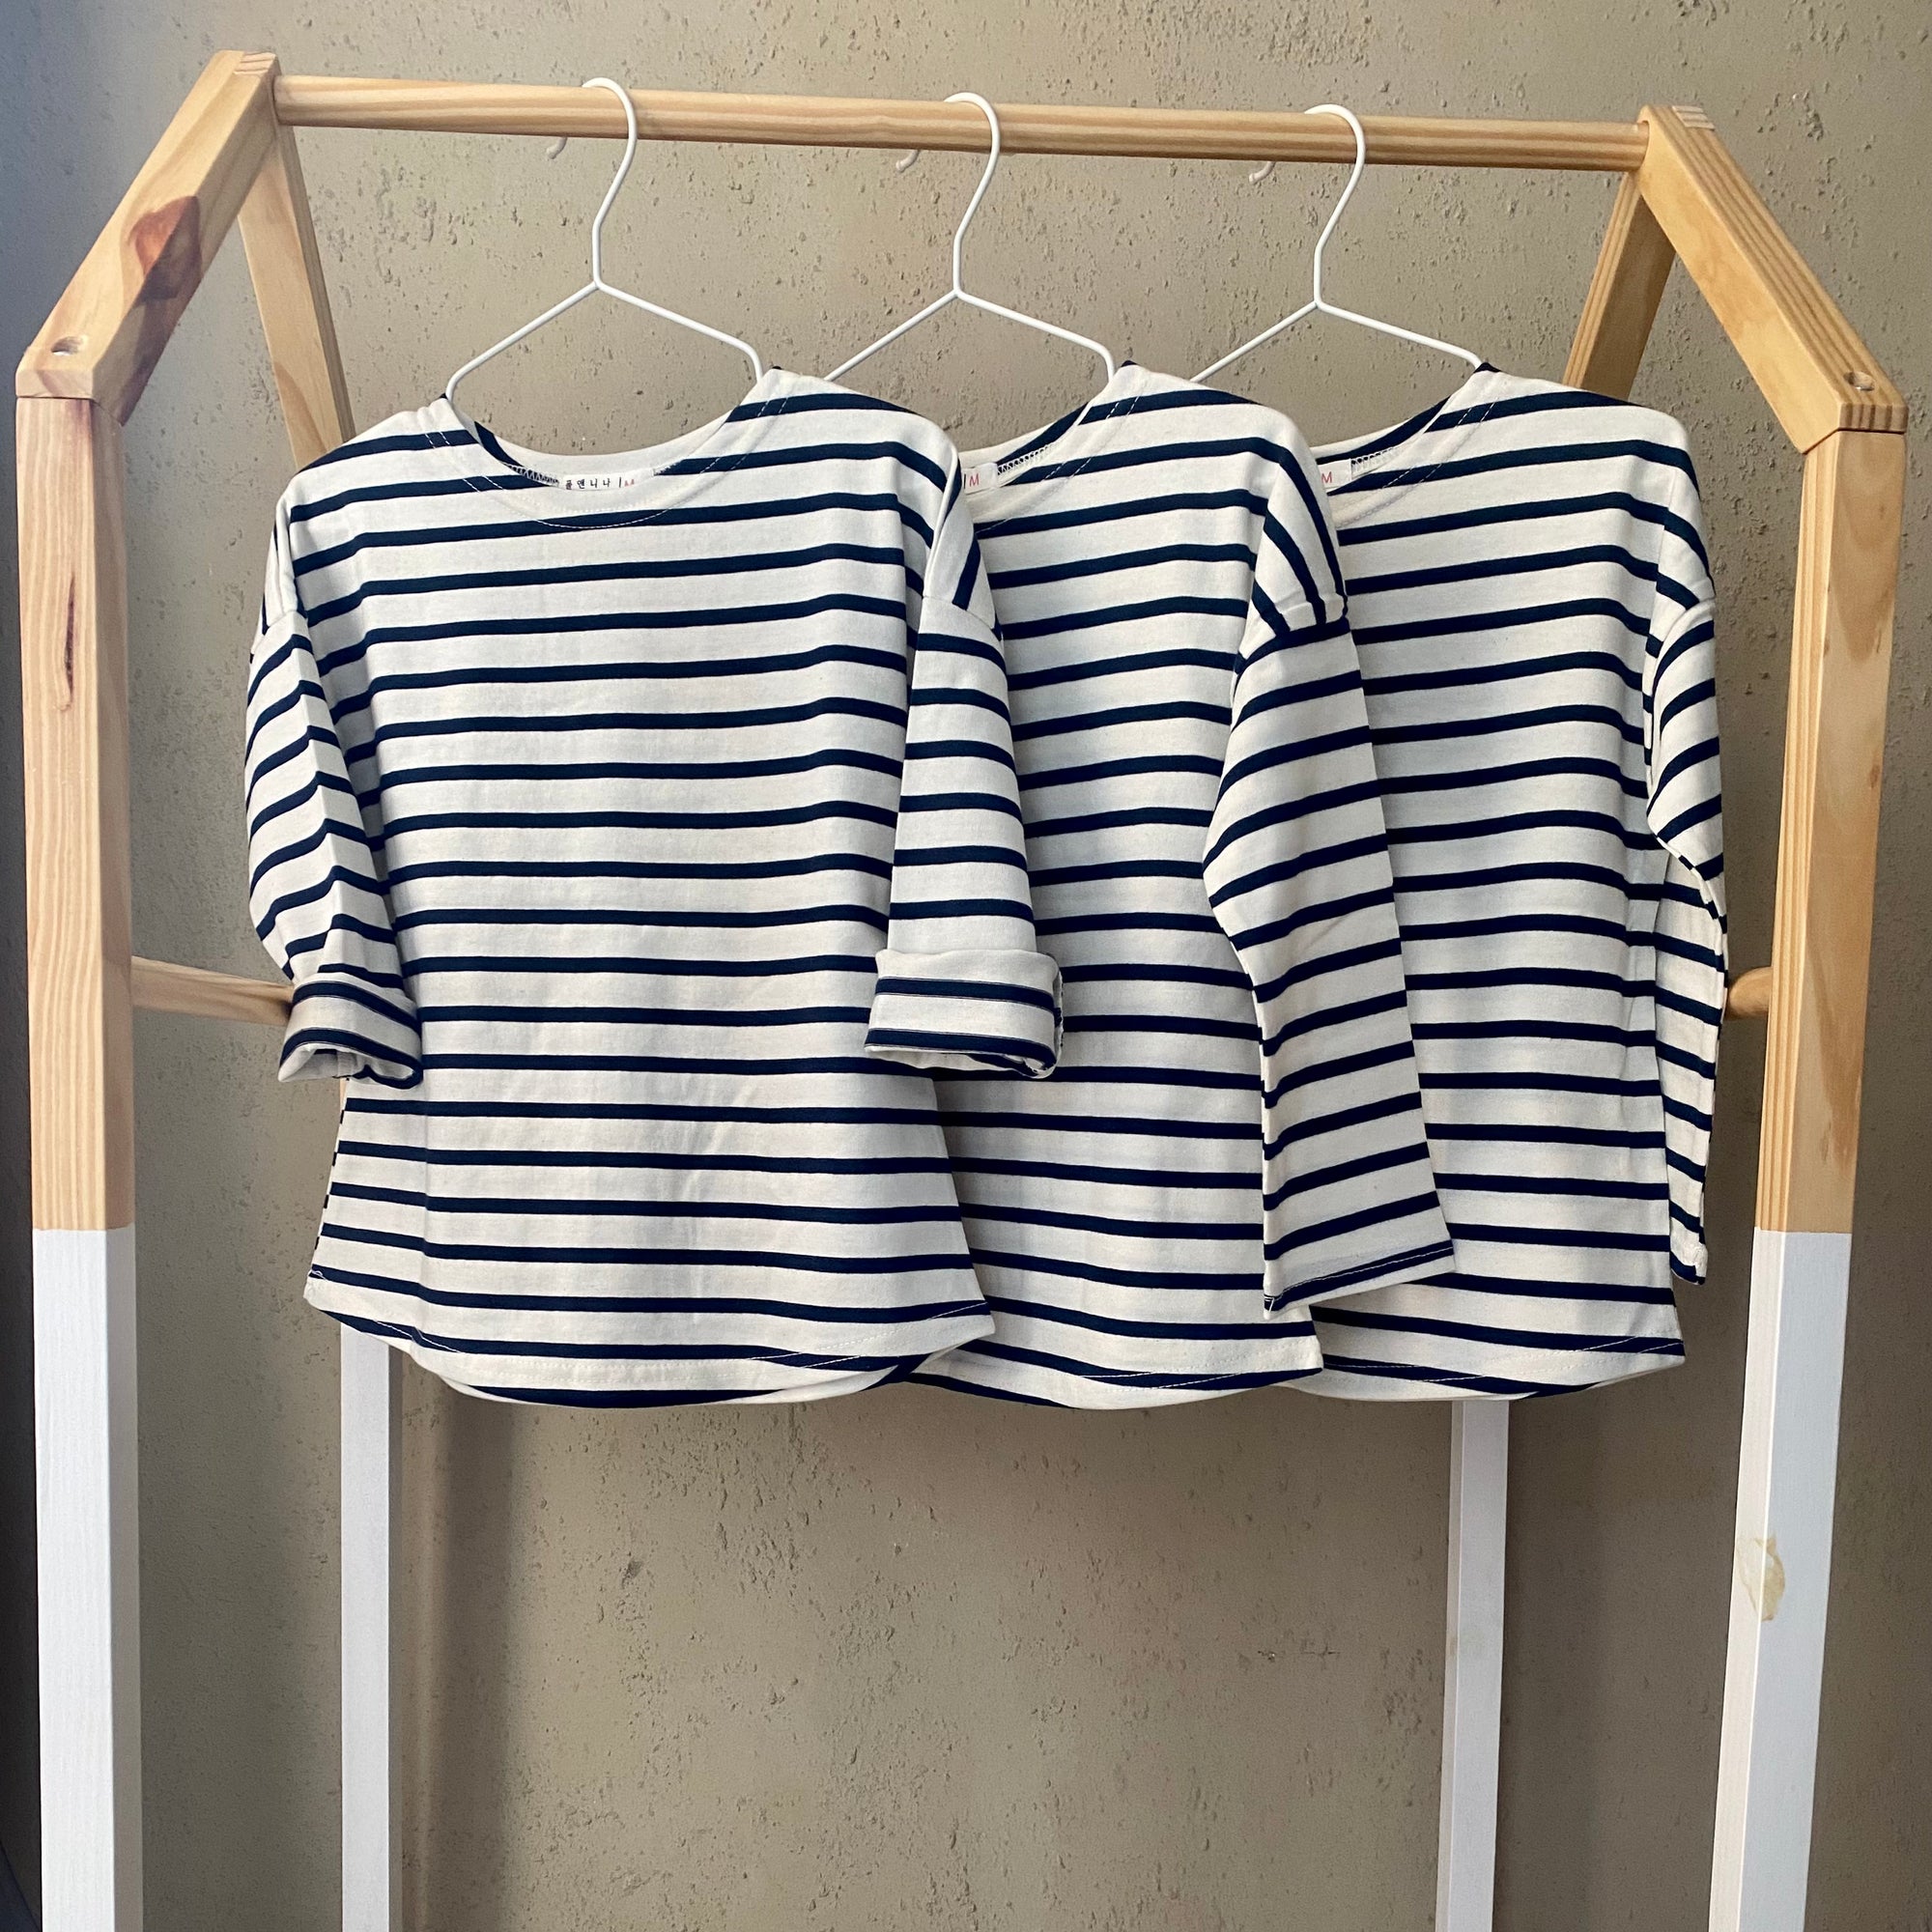 ʟɪᴍɪᴛᴇᴅ ᴇᴅɪᴛɪᴏɴ Breton Stripe Tee Heart Pin Set - Navy find Stylish Fashion for Little People- at Little Foxx Concept Store